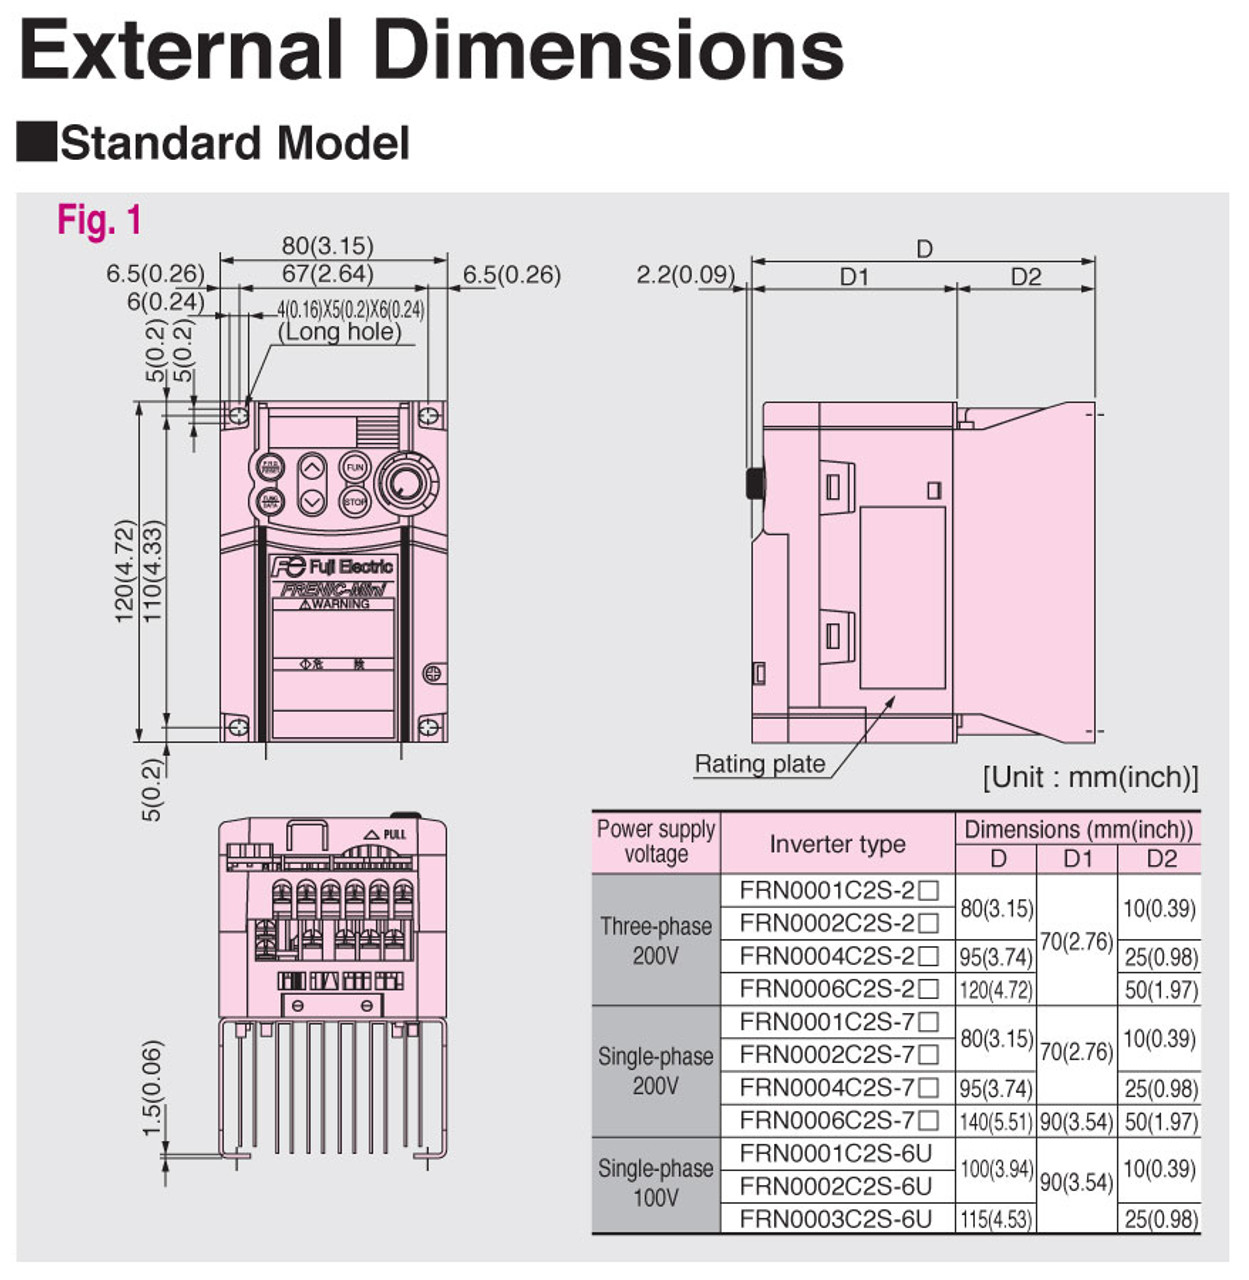 FRN0004C2S-7U - Dimensions